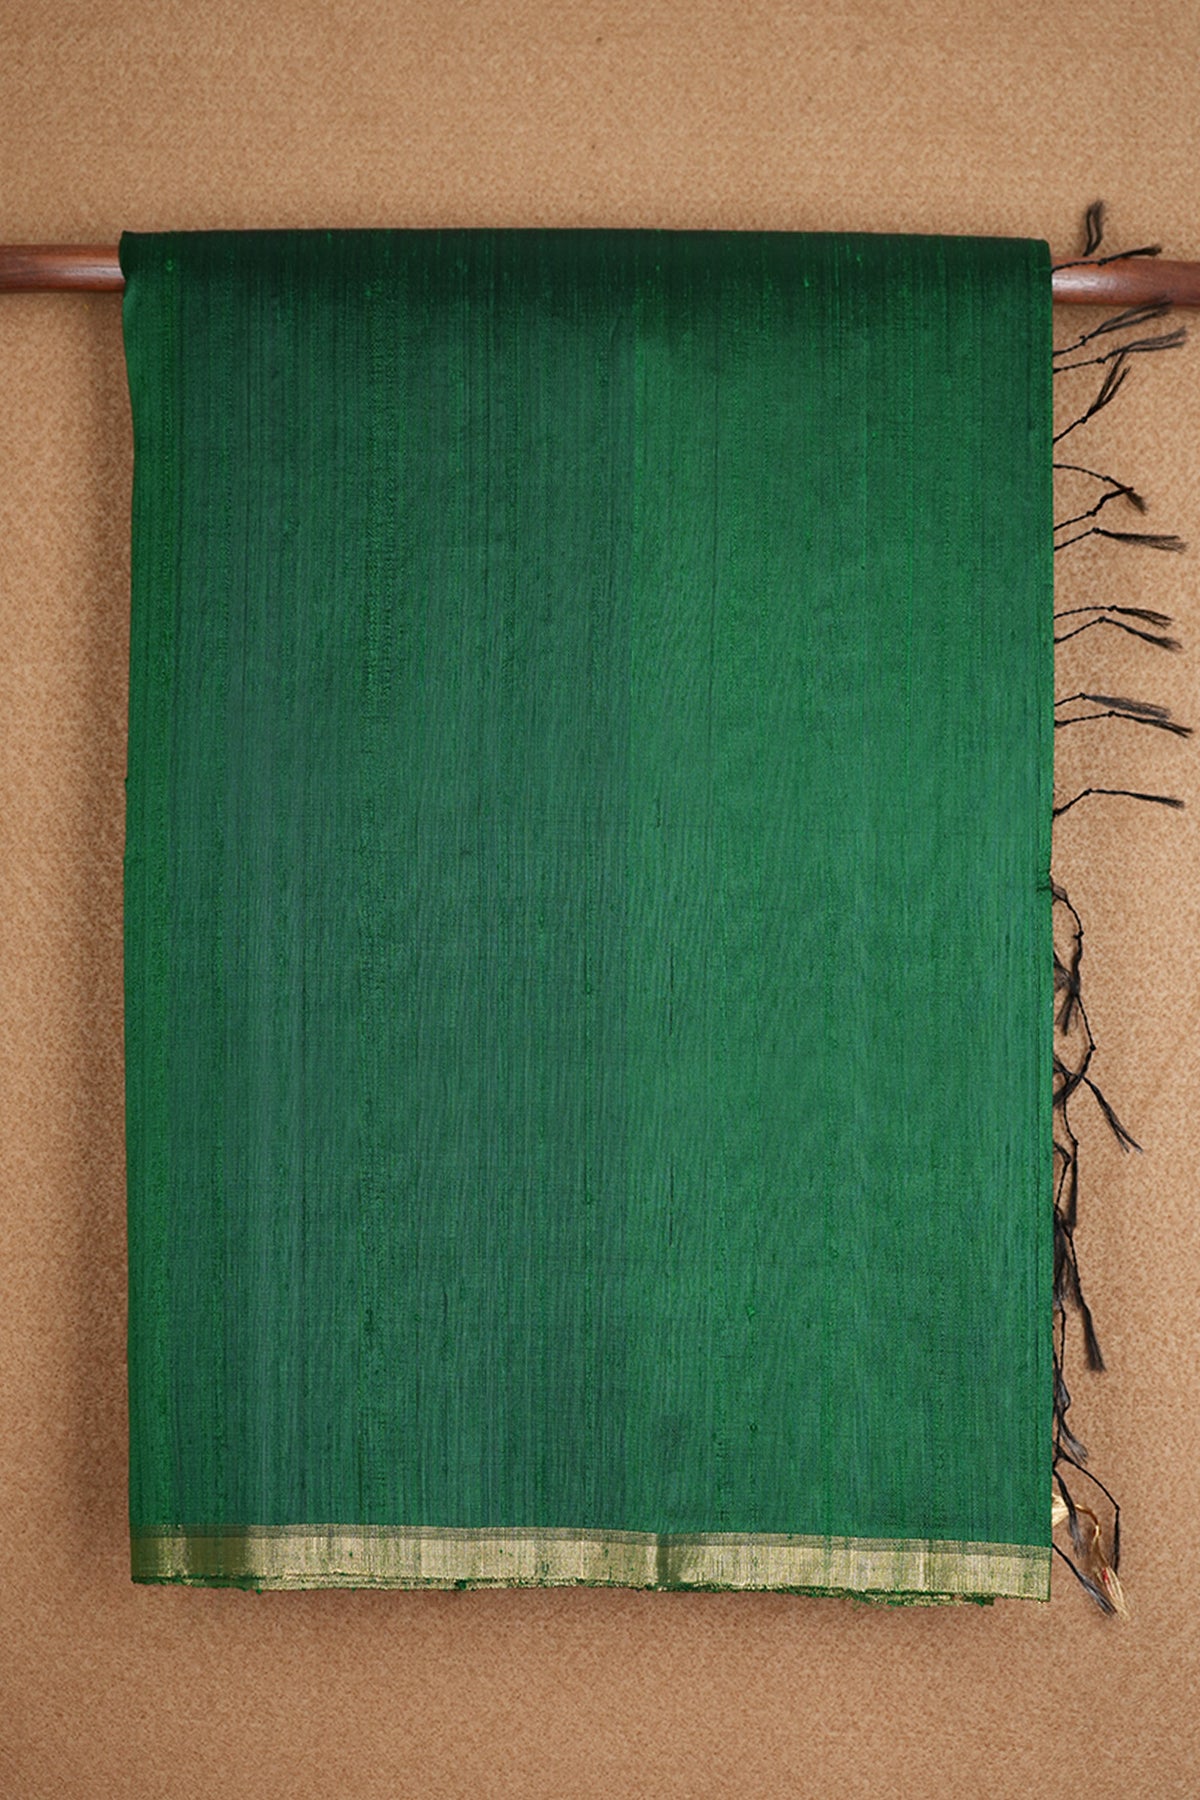 Bavanchi Gold Zari Border With Plain Emerald Green Raw Silk Saree